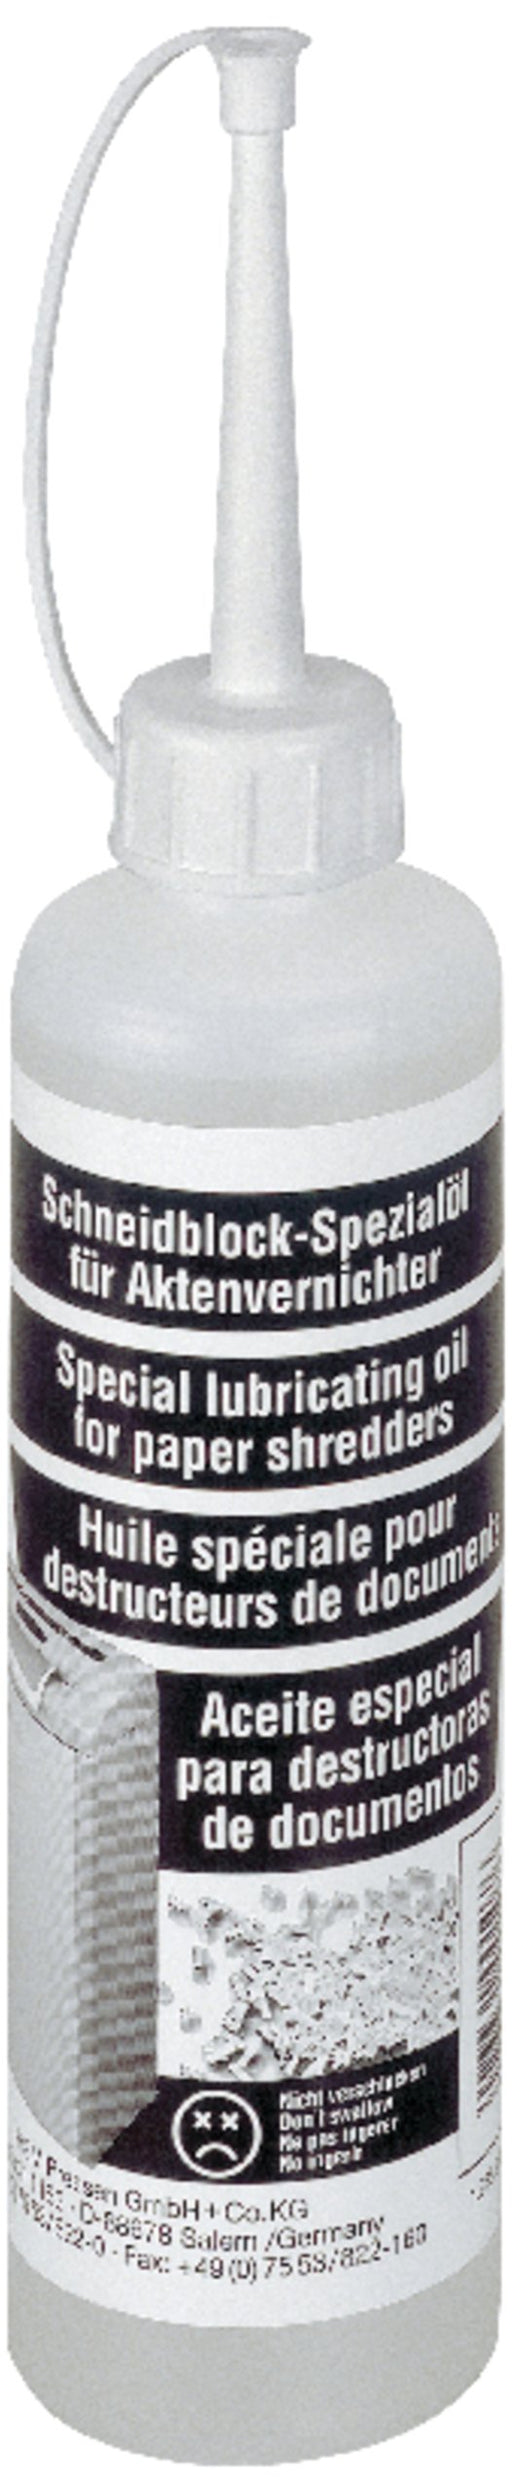 Best Value HSM Special Lubrication Oil for Shredder, 250 ml